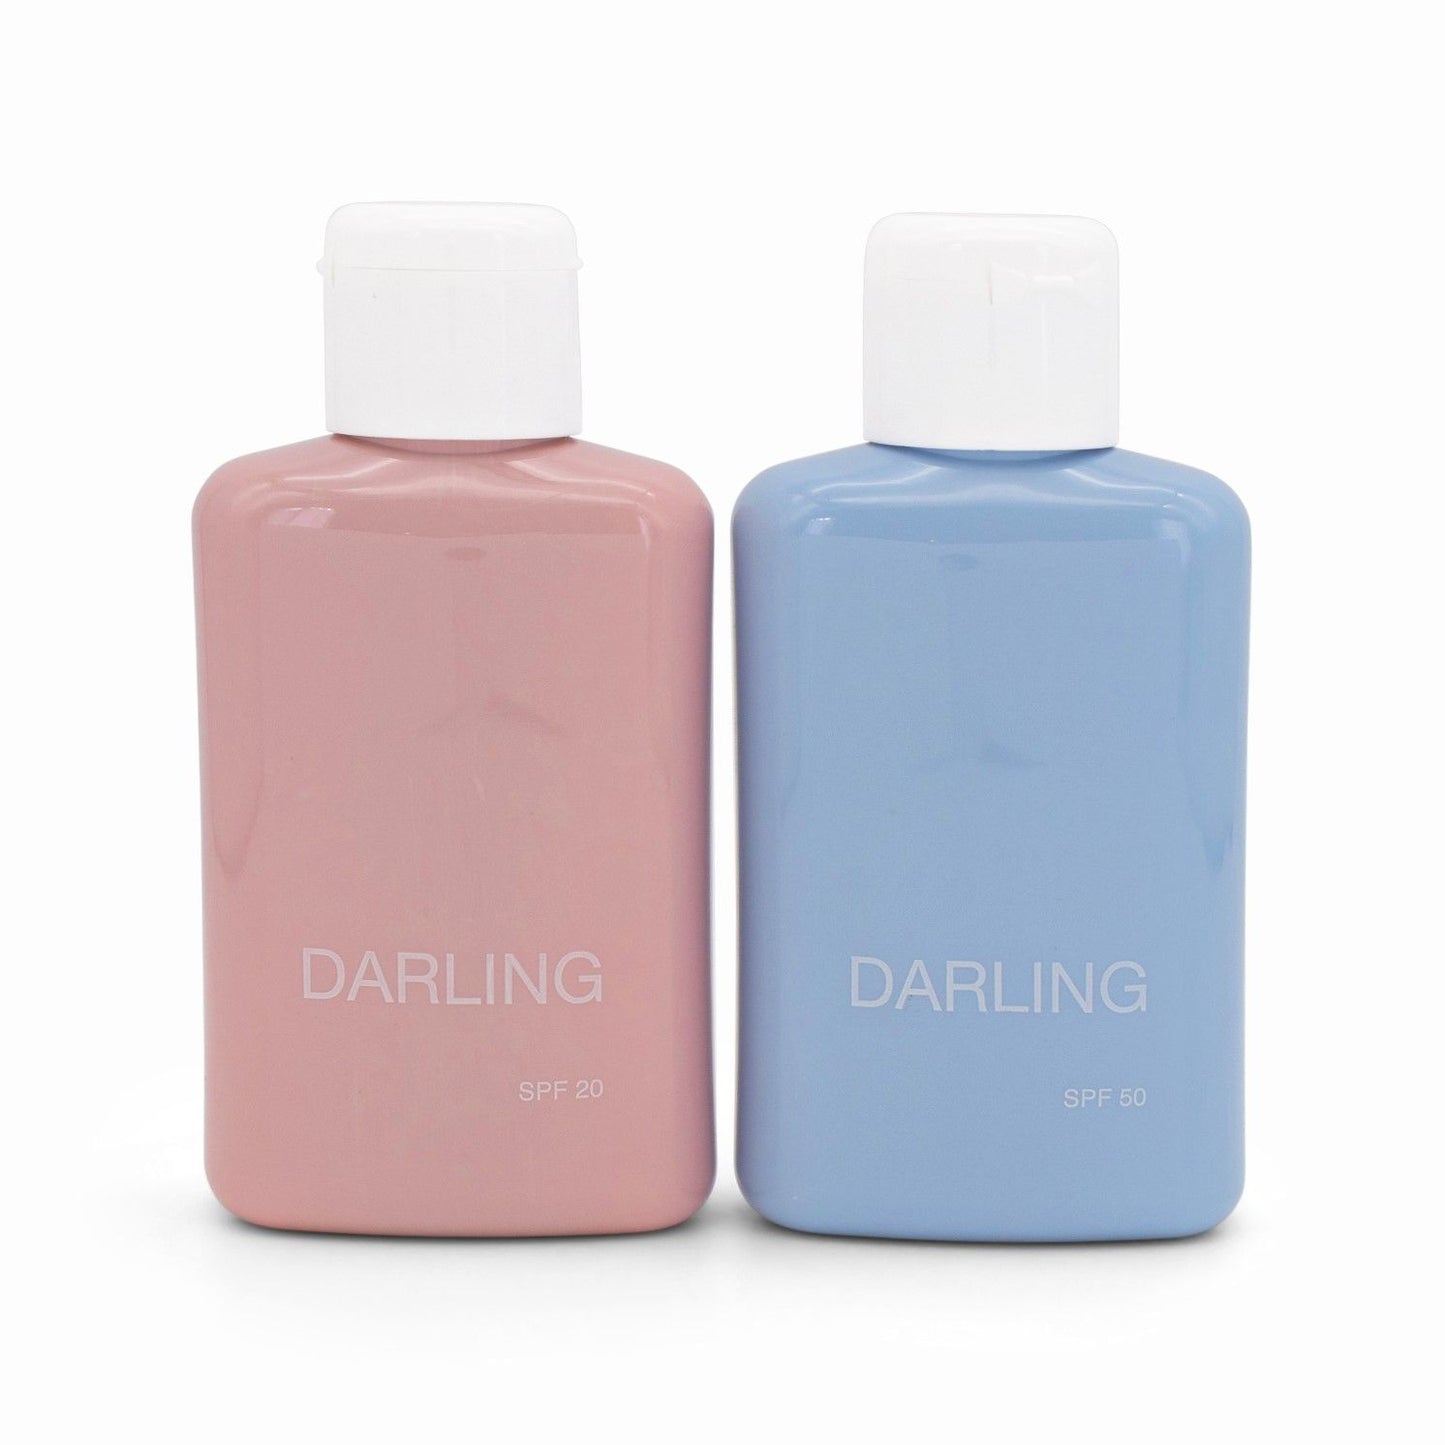 Darling The Travel Kit SPF20 & SPF50 2 x 100ml - Imperfect Box